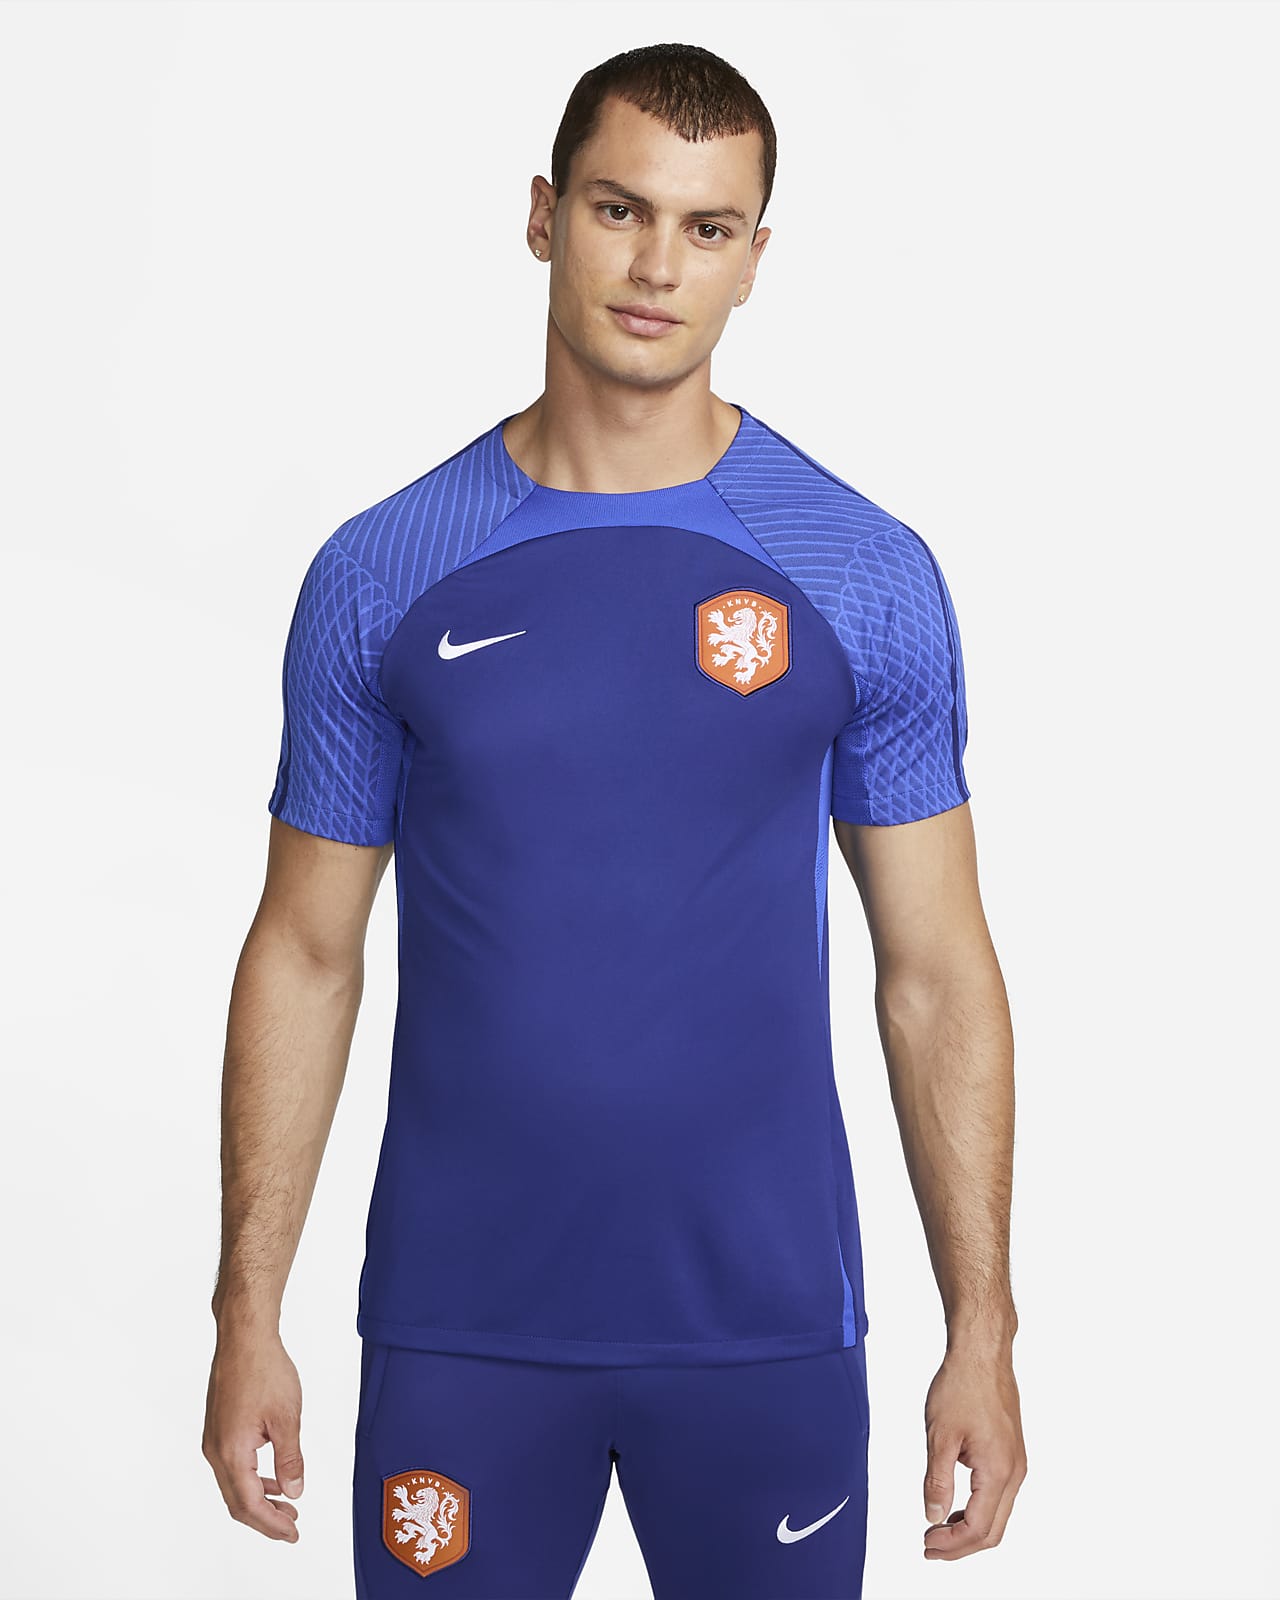 Geaccepteerd Triatleet spontaan Netherlands Strike Men's Nike Dri-FIT Short-Sleeve Soccer Top. Nike.com